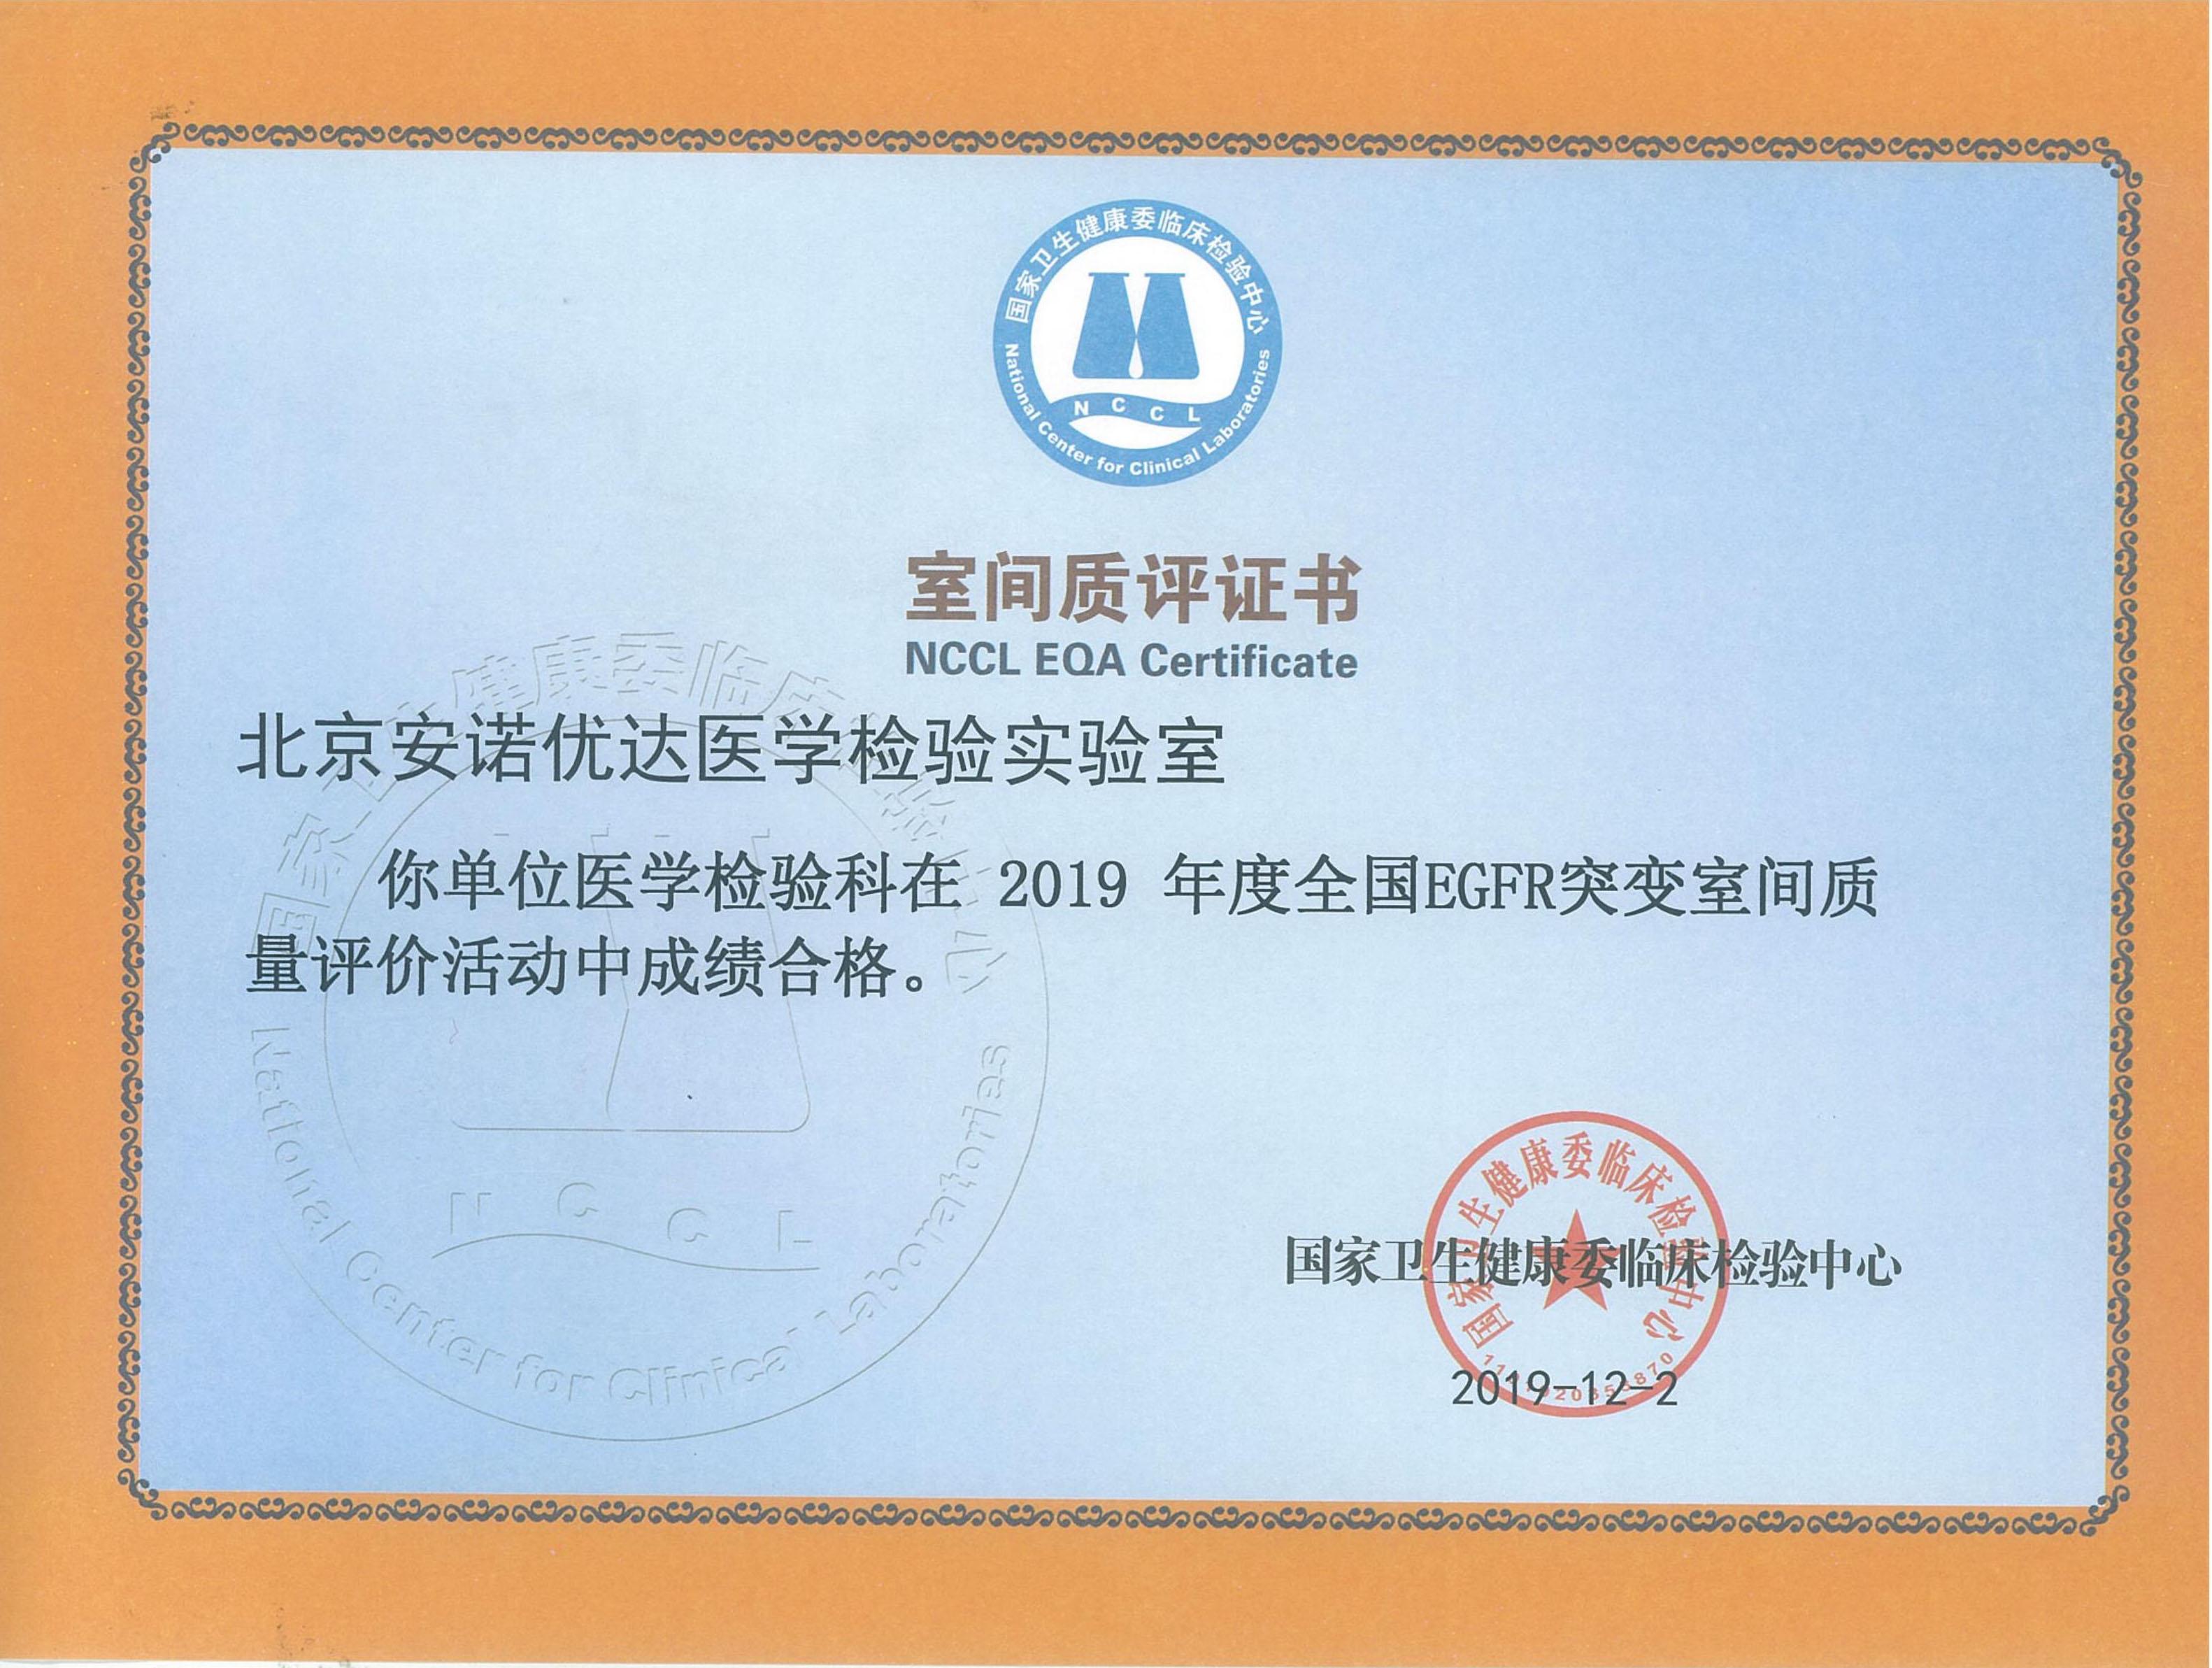 NCCL EQA Certificate of EGFR Mutation (2019)